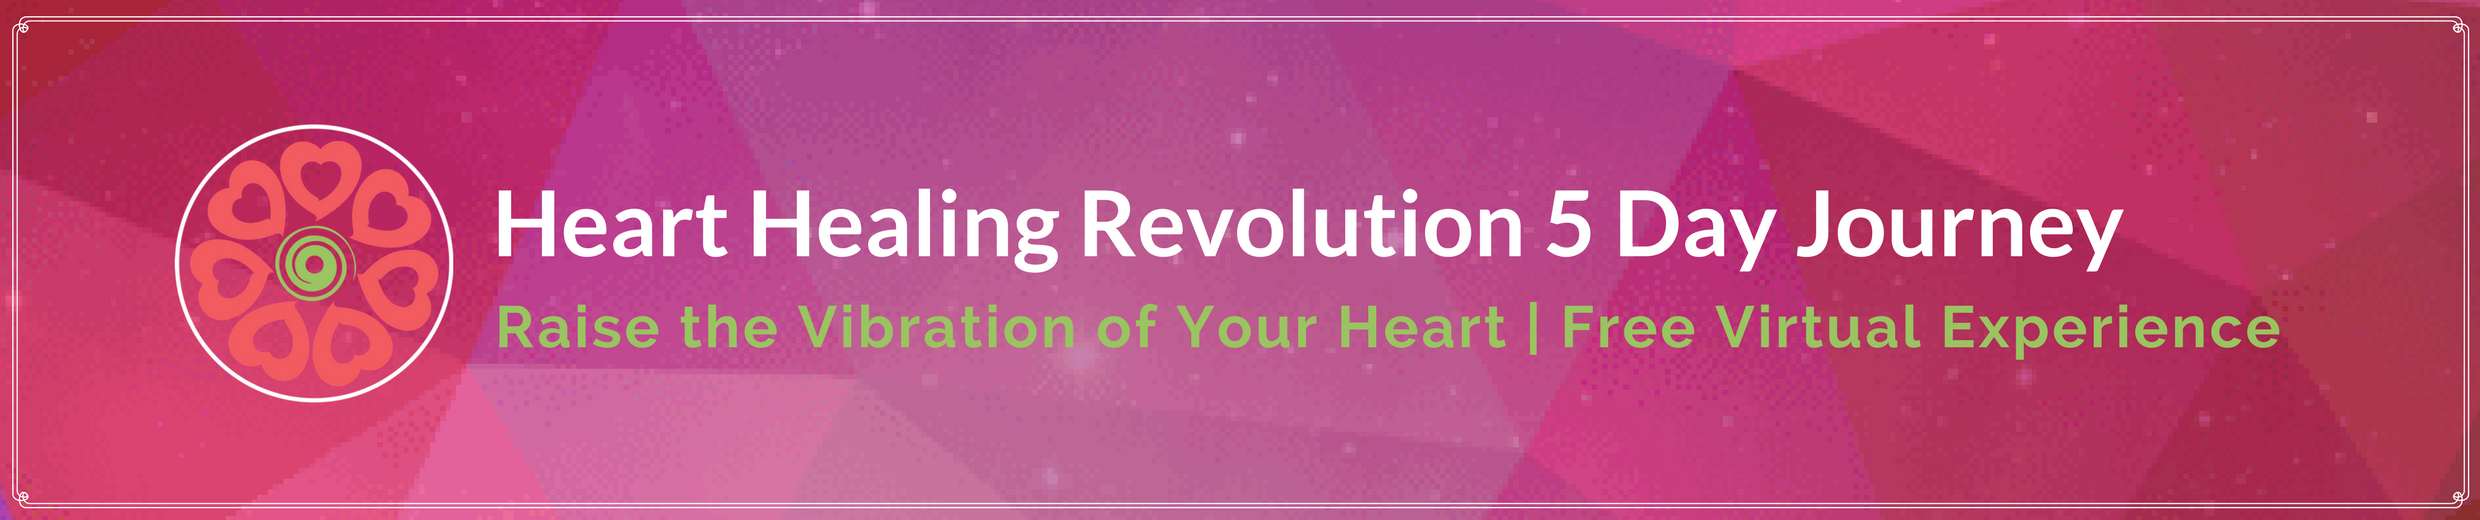 heart healing revolution 5 day journey